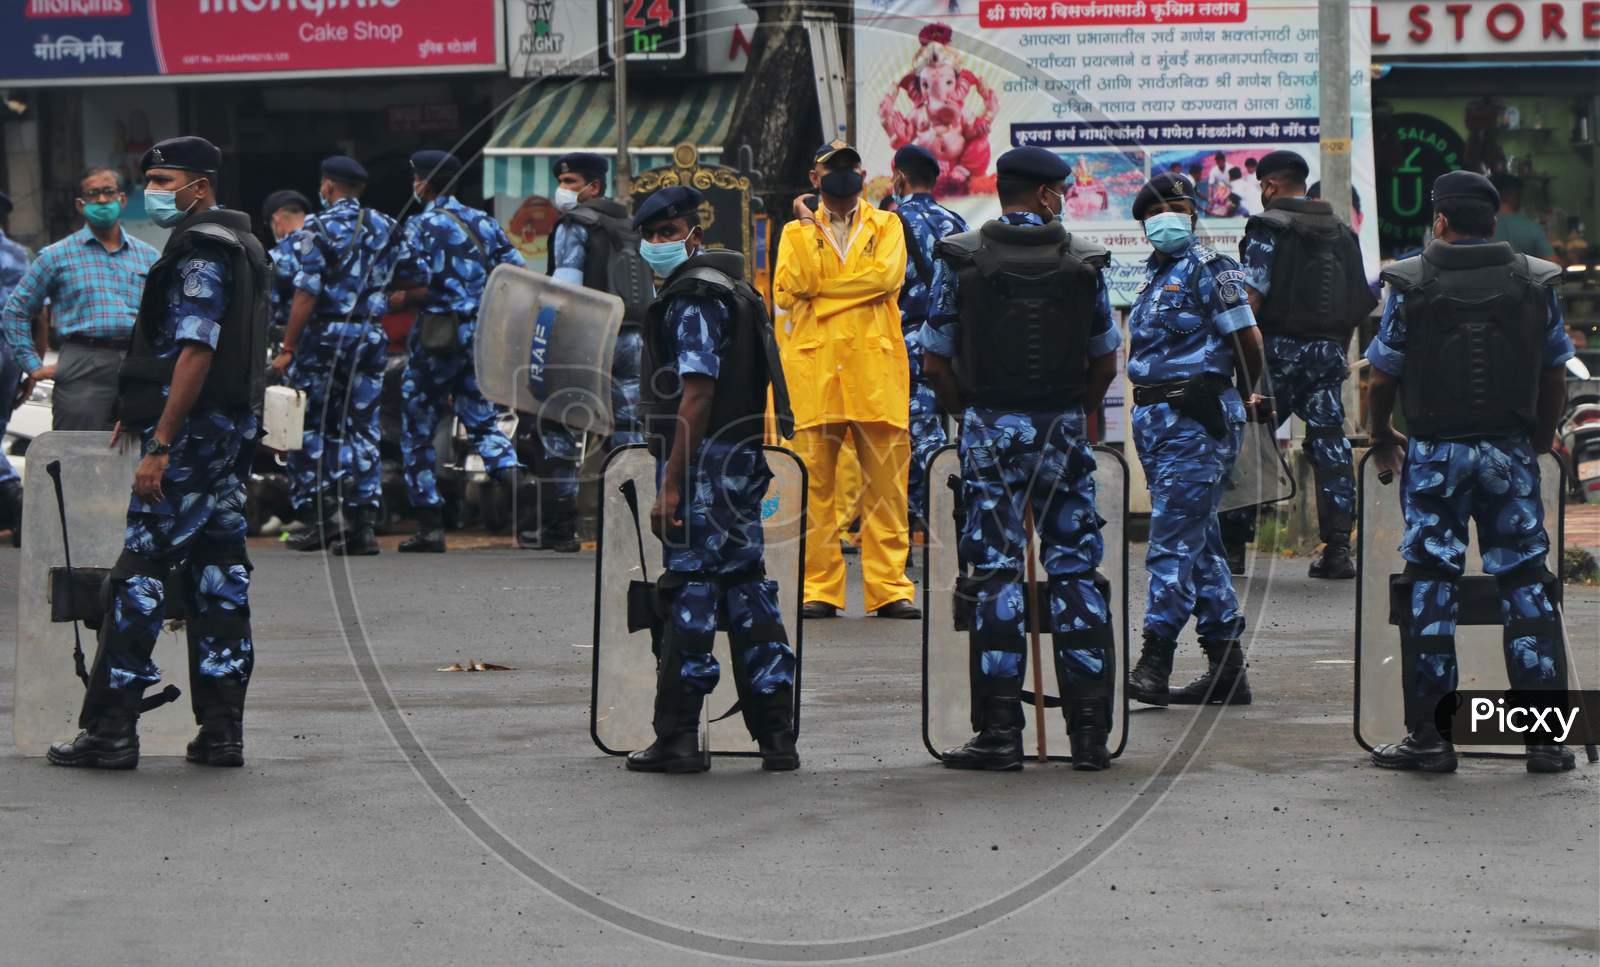 Tight security during Muharram procession amid coronavirus pandemic, in Mumbai, India on August 30, 2020.